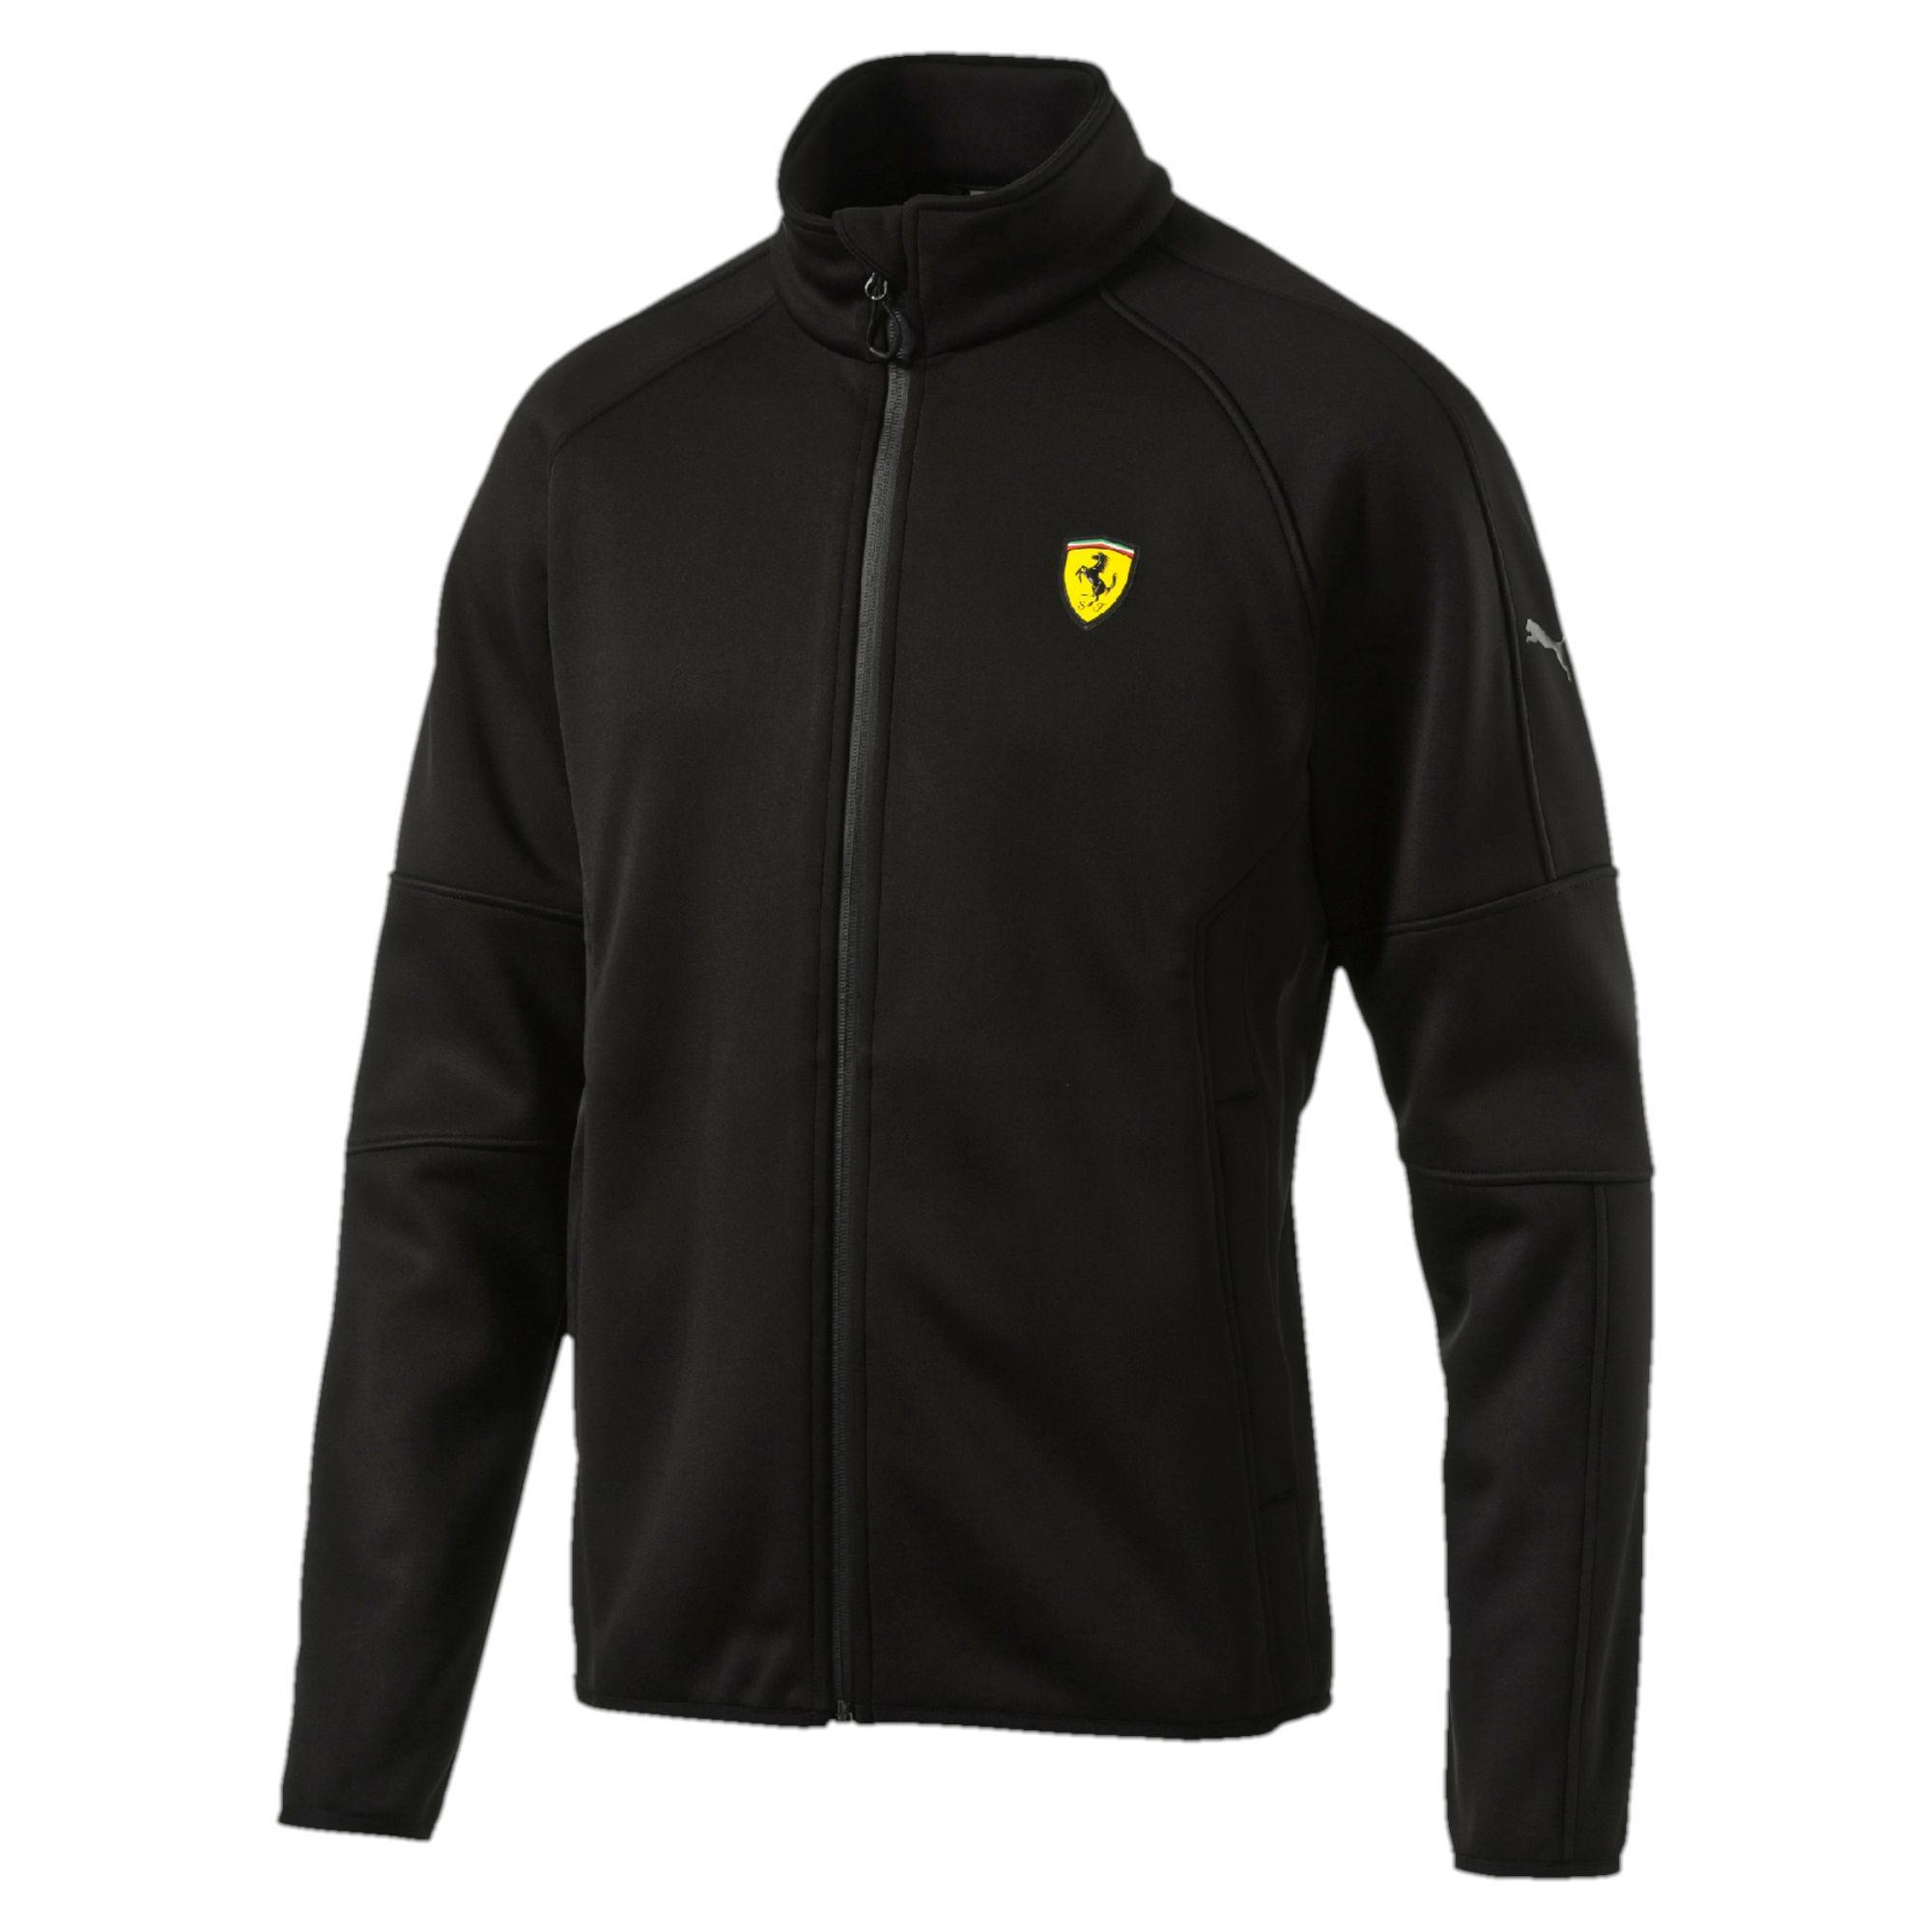 PUMA Synthetic Ferrari Softshell Jacket in Black for Men - Lyst